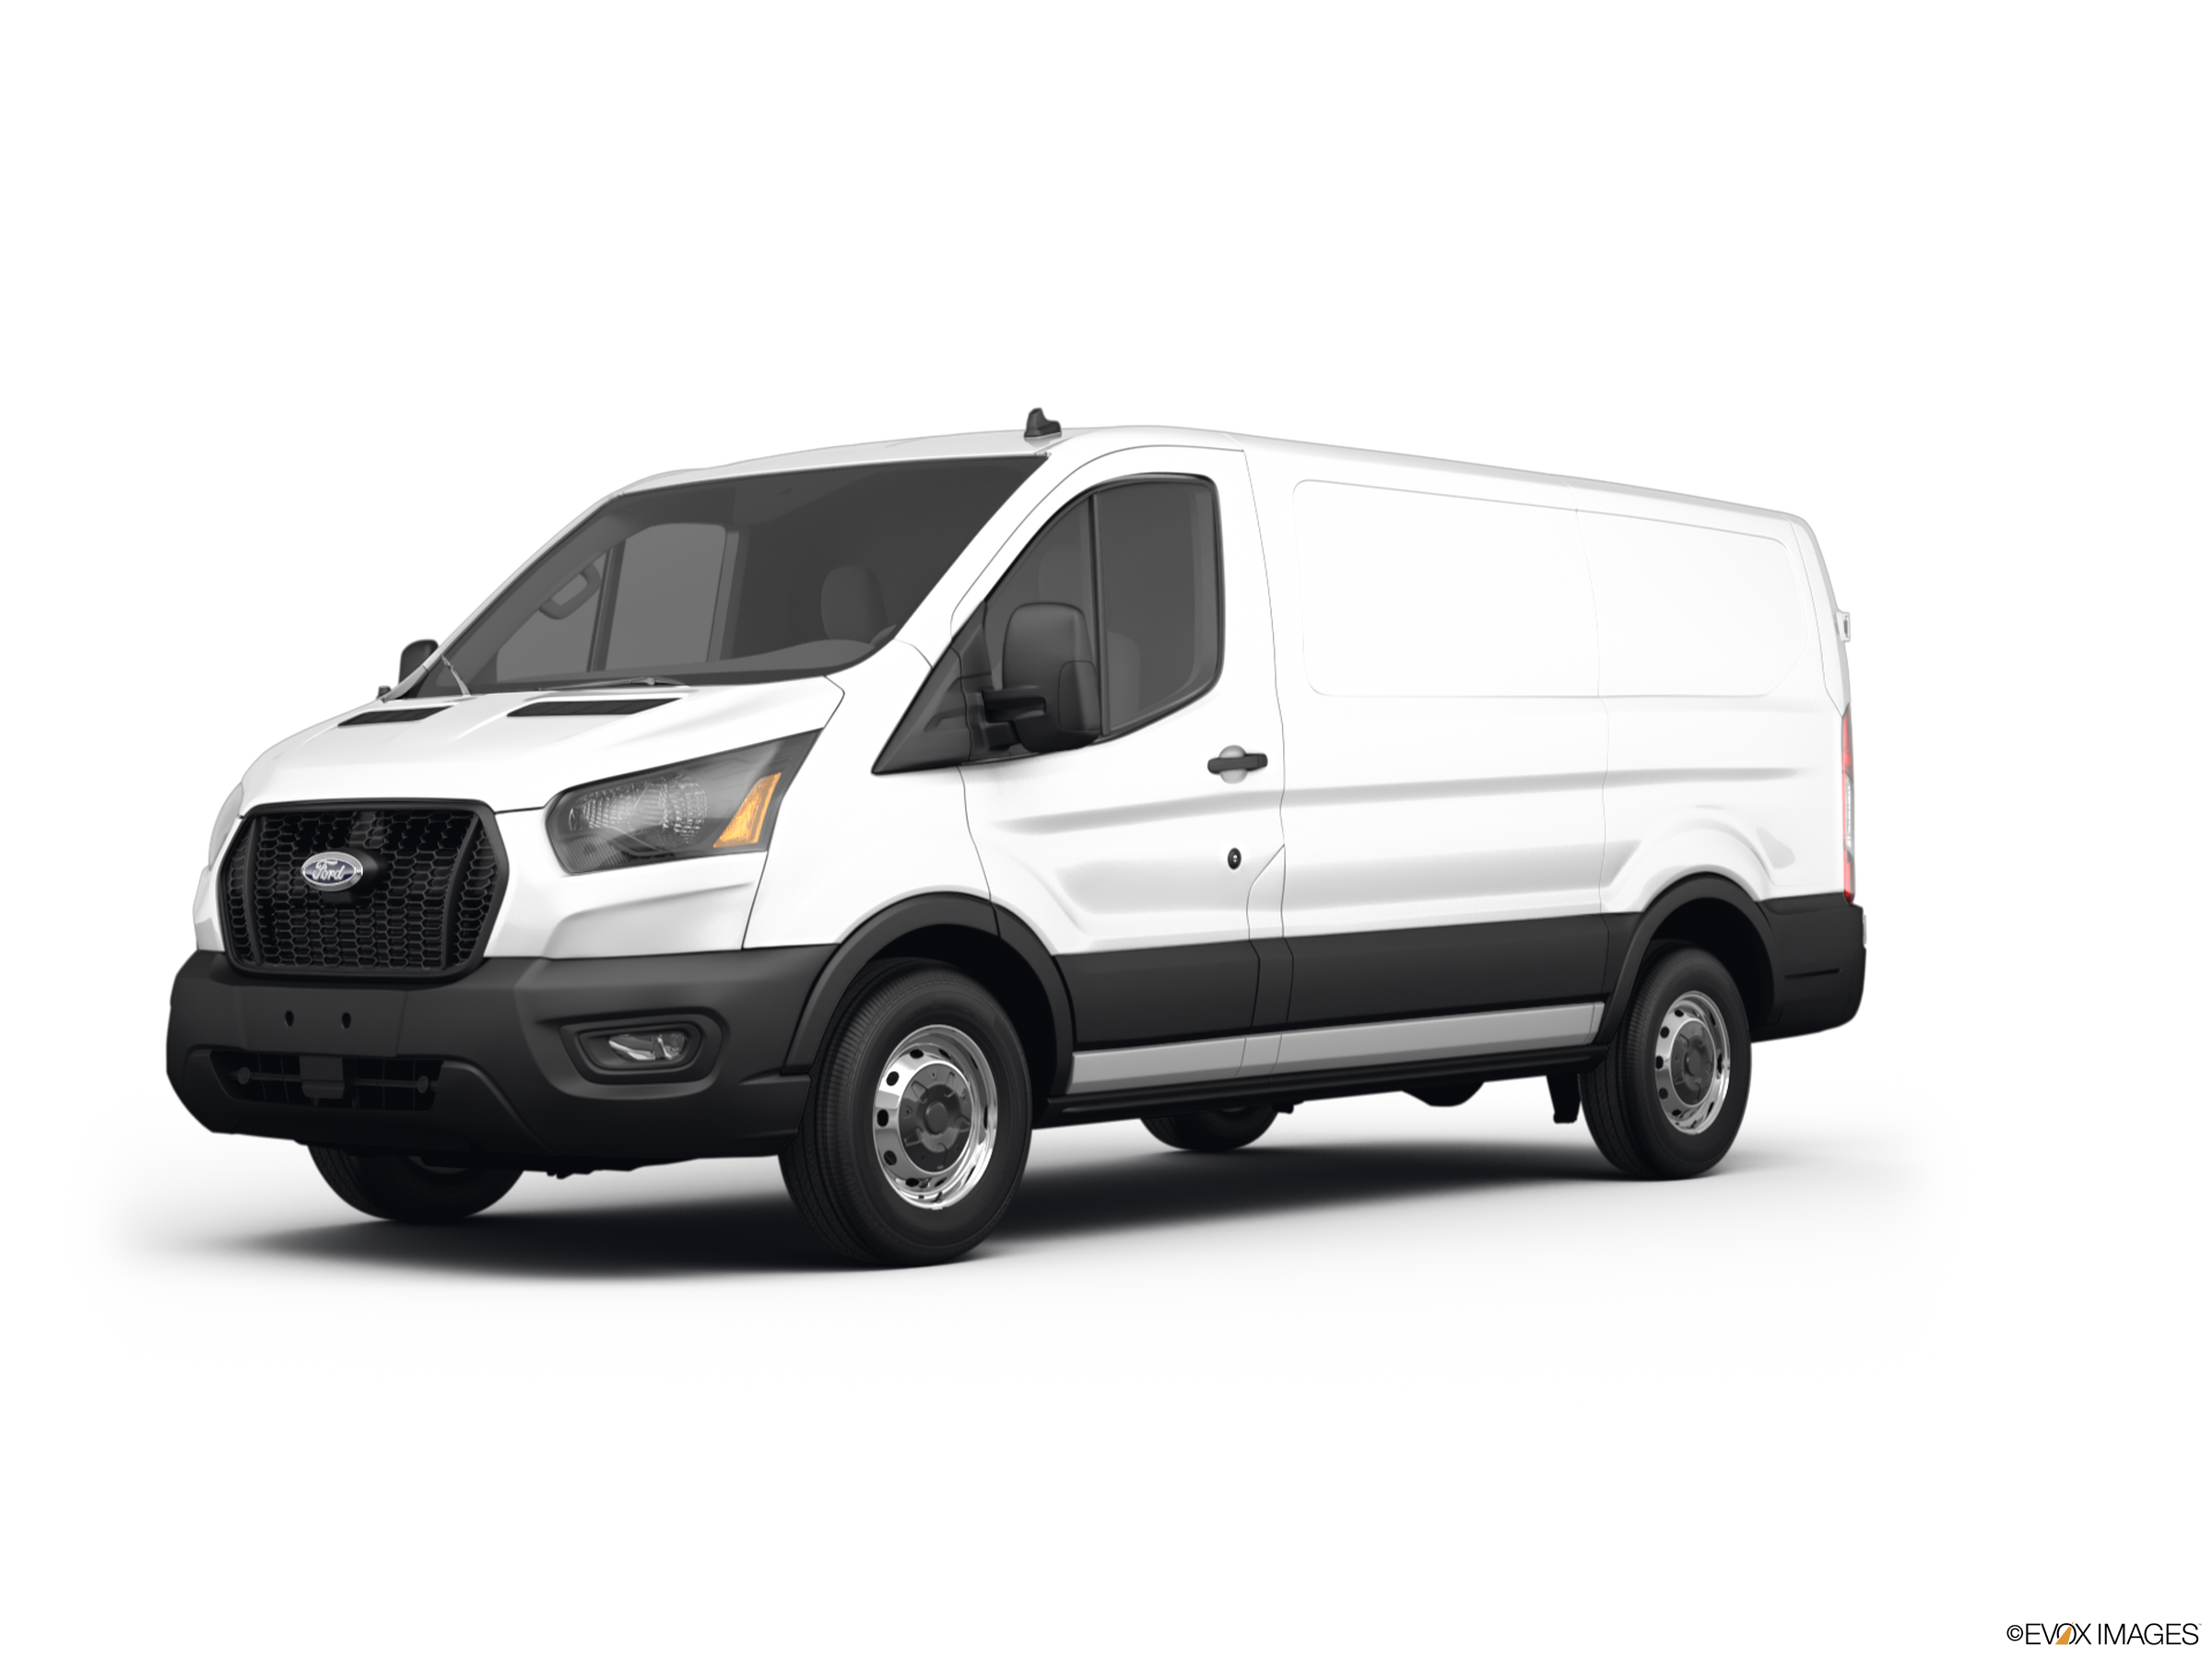 Ford Transit 150 Cargo Van Inside Dimensions Home Alqu